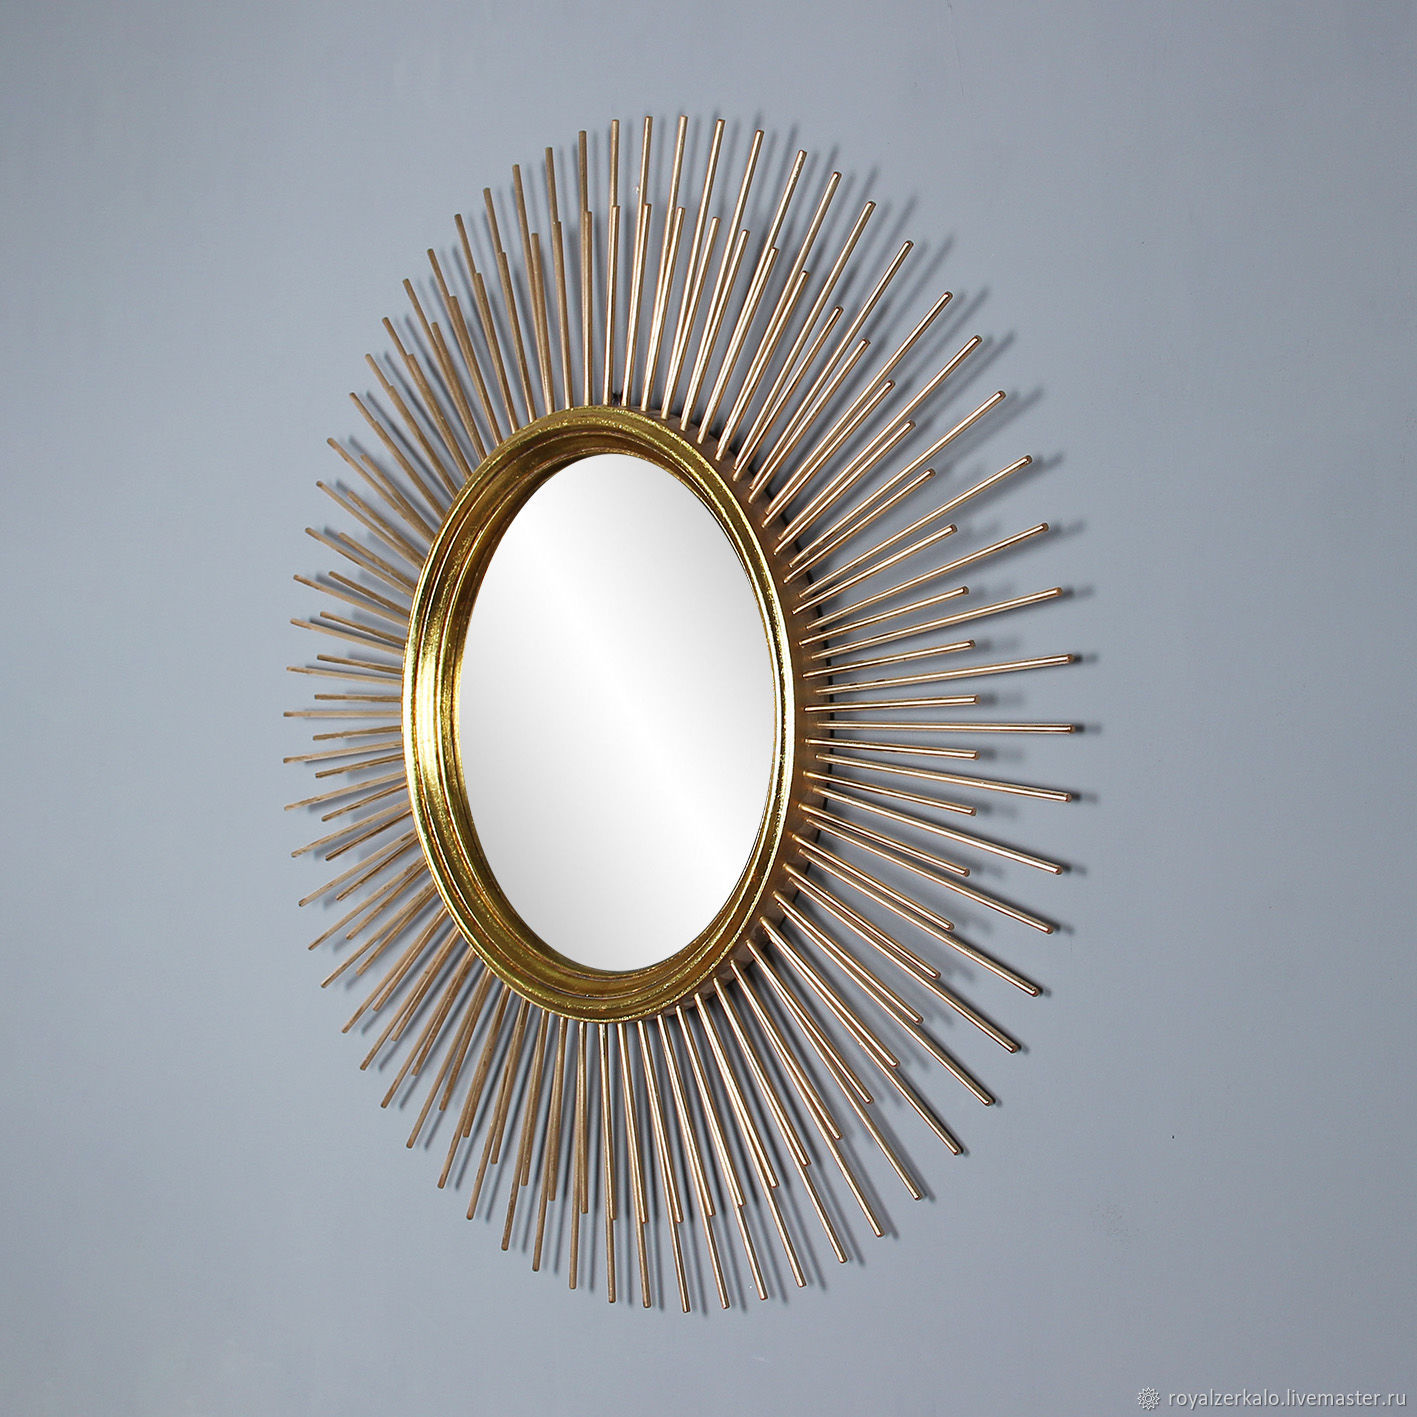 Зеркало gold. Зеркало-солнце настенное золотое "Белладжио Голд". Зеркало - солнце, Кимберли золото. Зеркало настенное вращающееся st027. Зеркало настенное круглое золотое "Гелиос Голд".